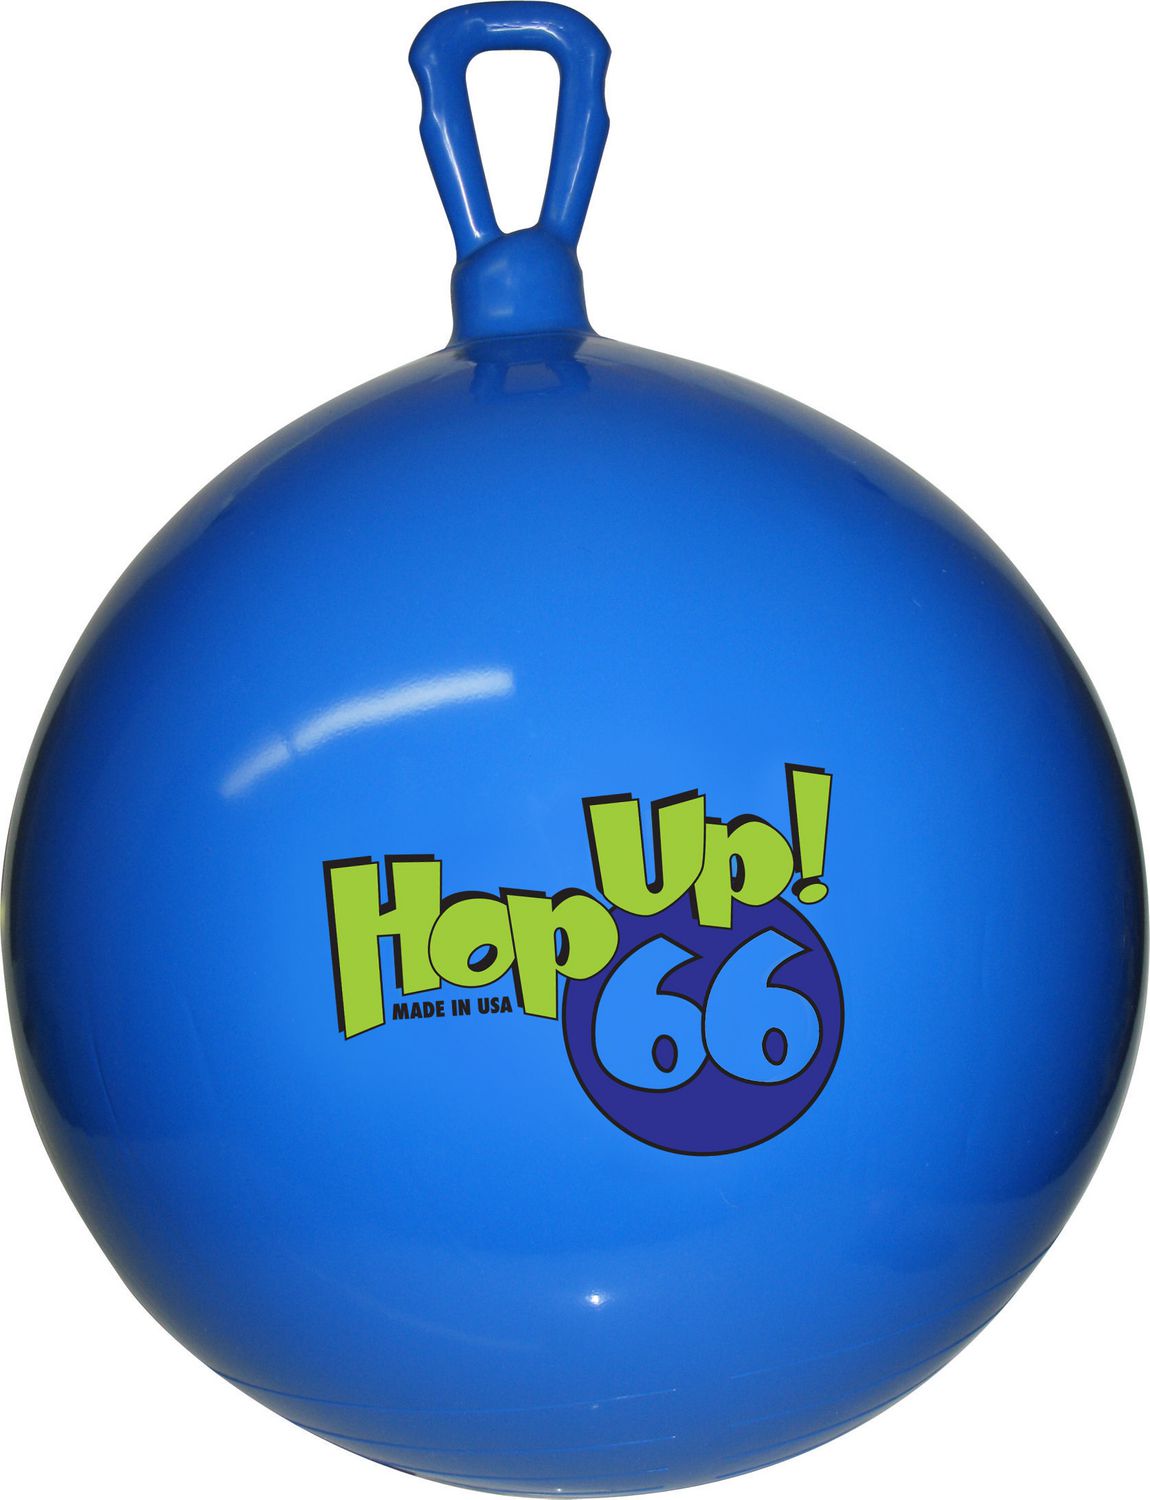 Hedstrom Hop Up Hopper Ball 26-Inch 